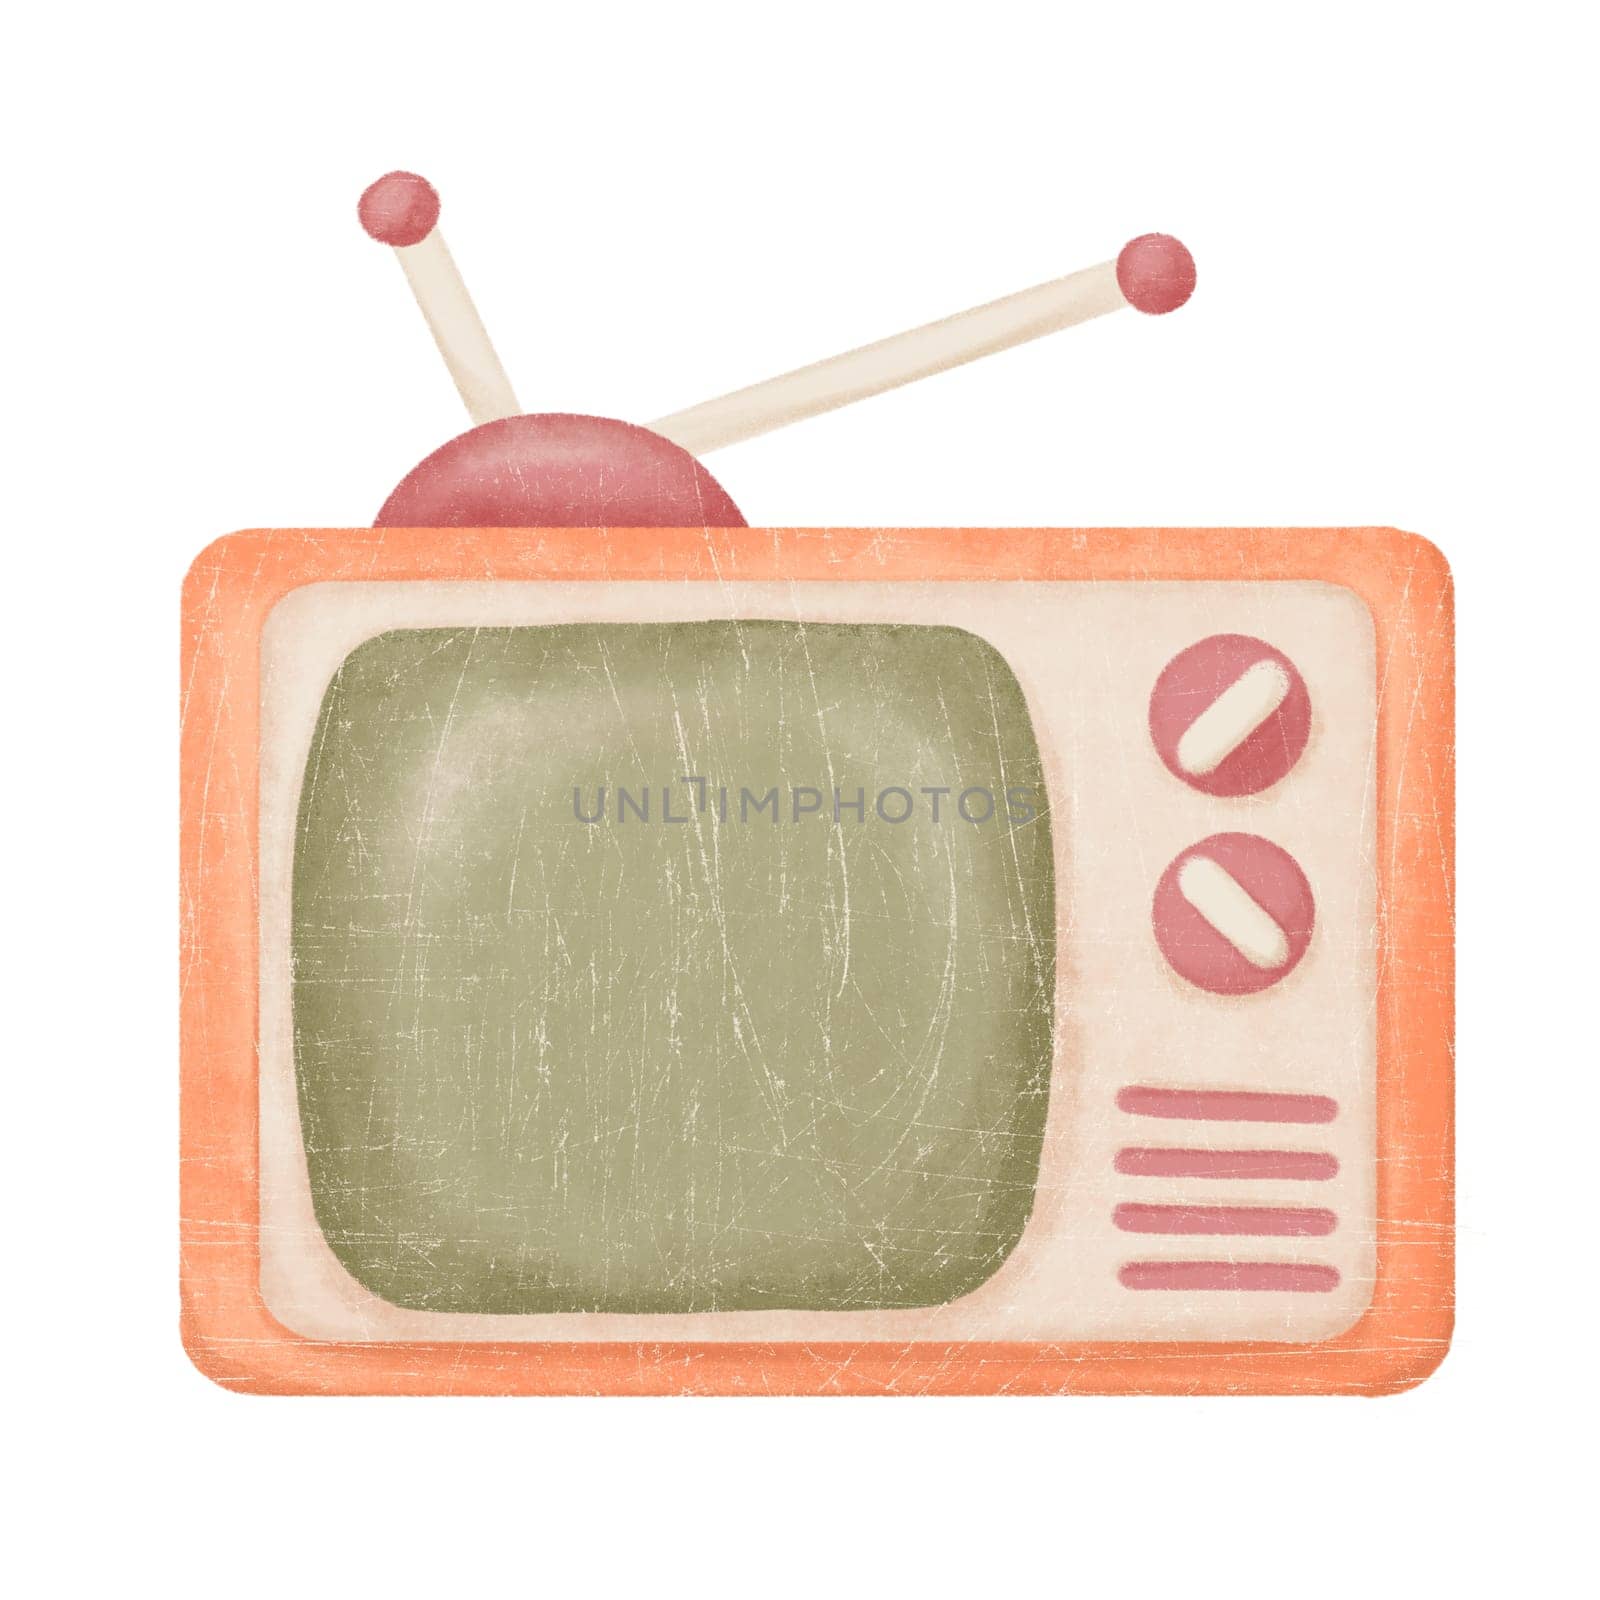 Old entertainment television. Retro tube tv illustration, color vintage television entertainment media isolated on white